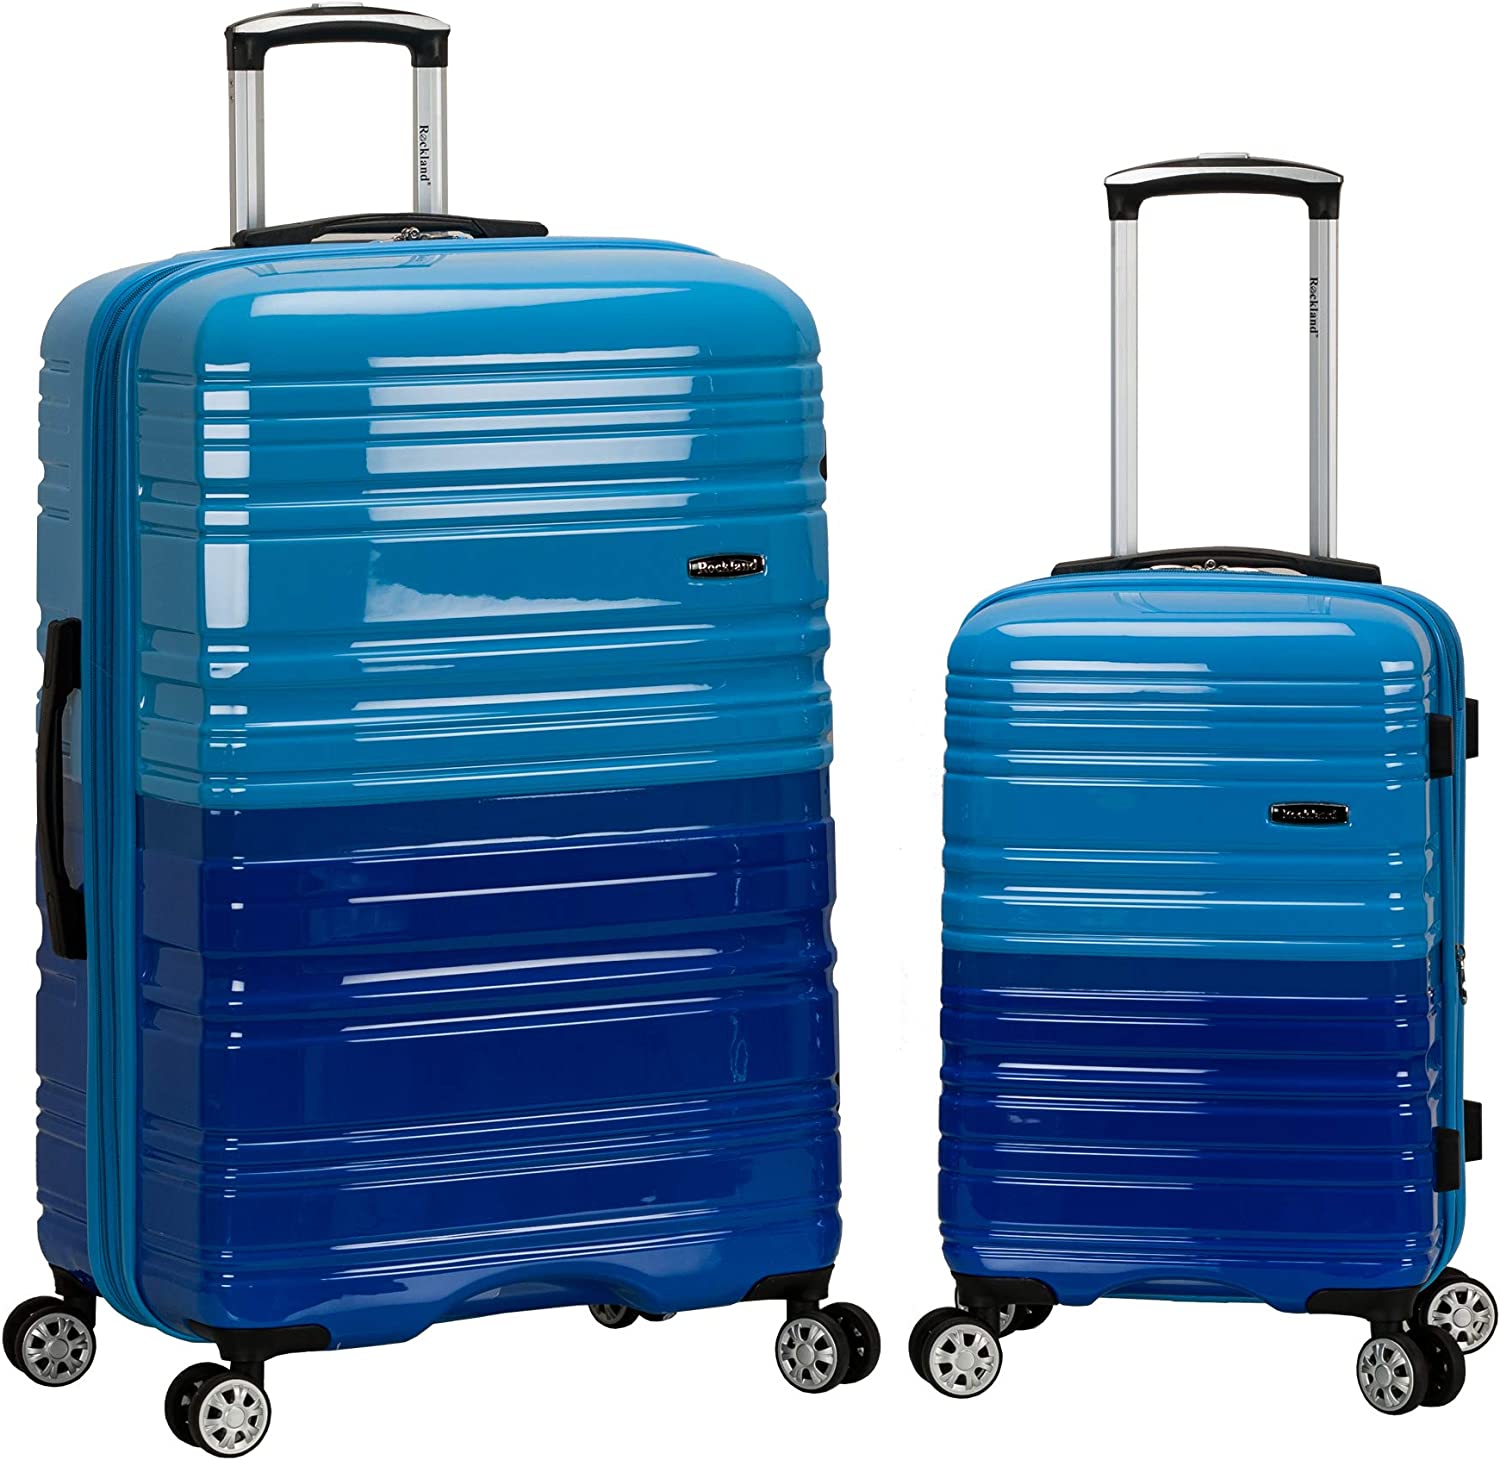 Rockland Suitcase Amazon